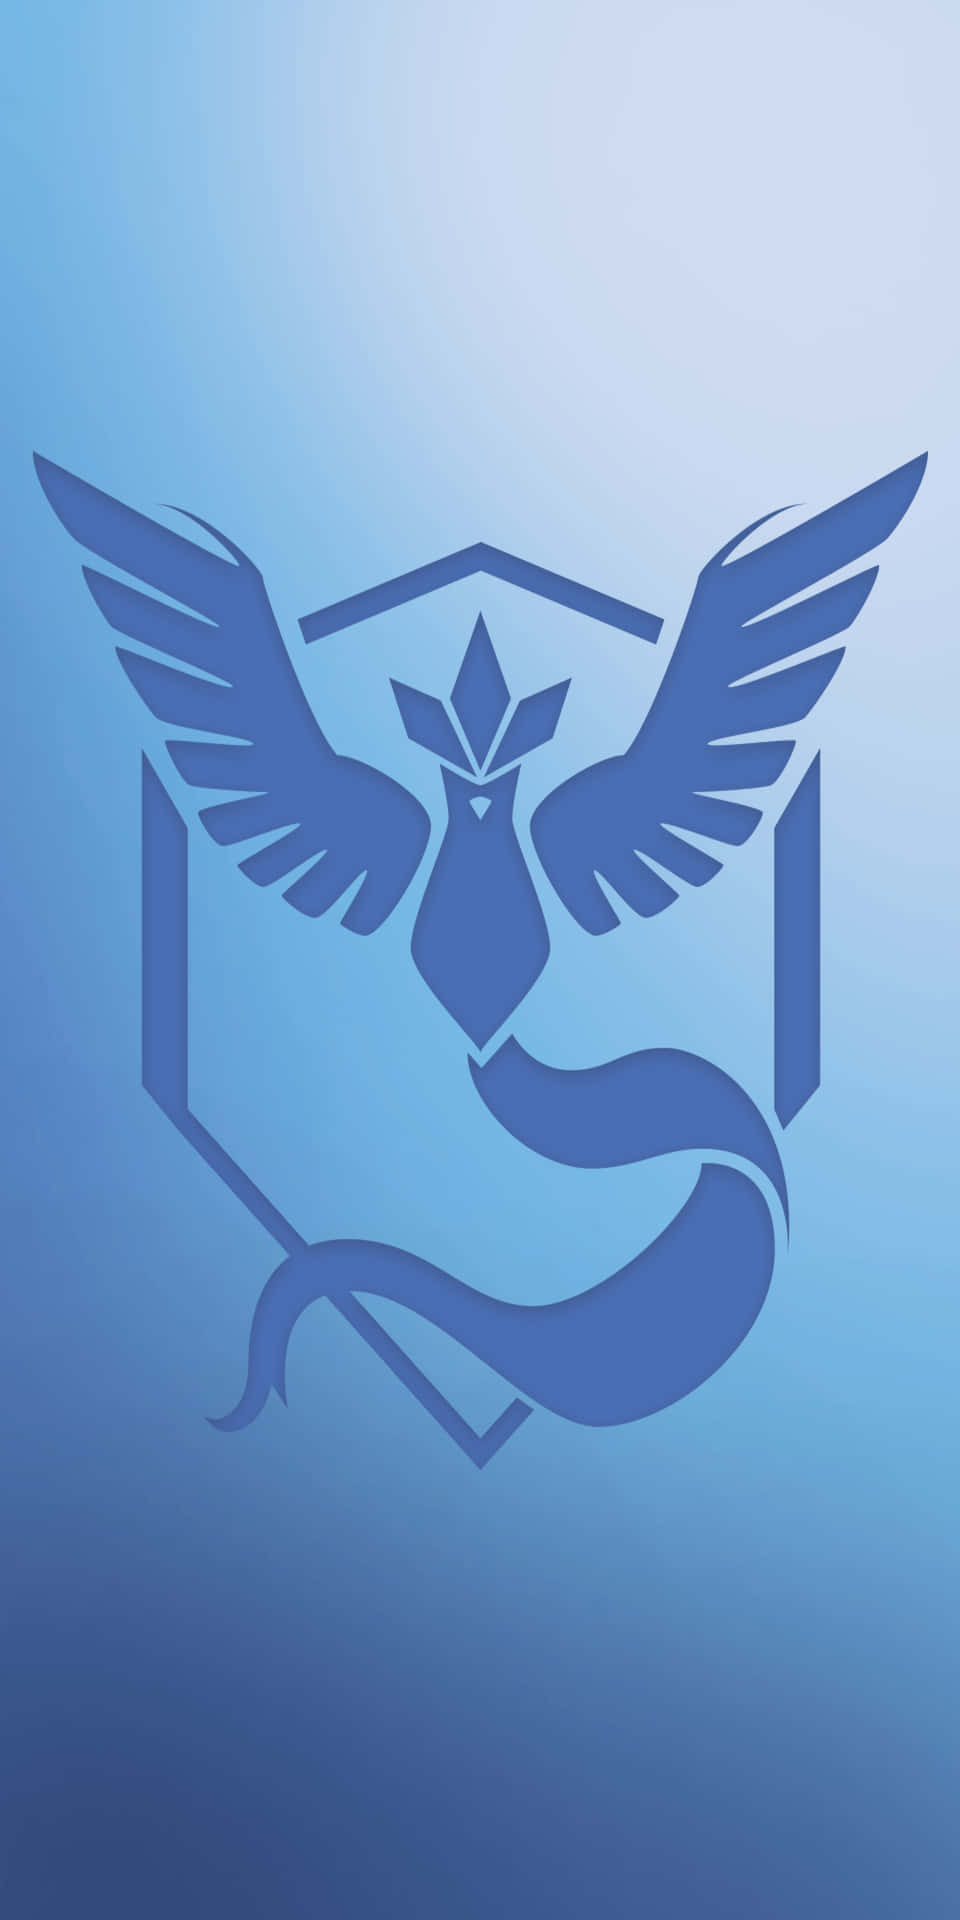 Pixel3 Minimal Bakgrund Blå Fågel Emblem.